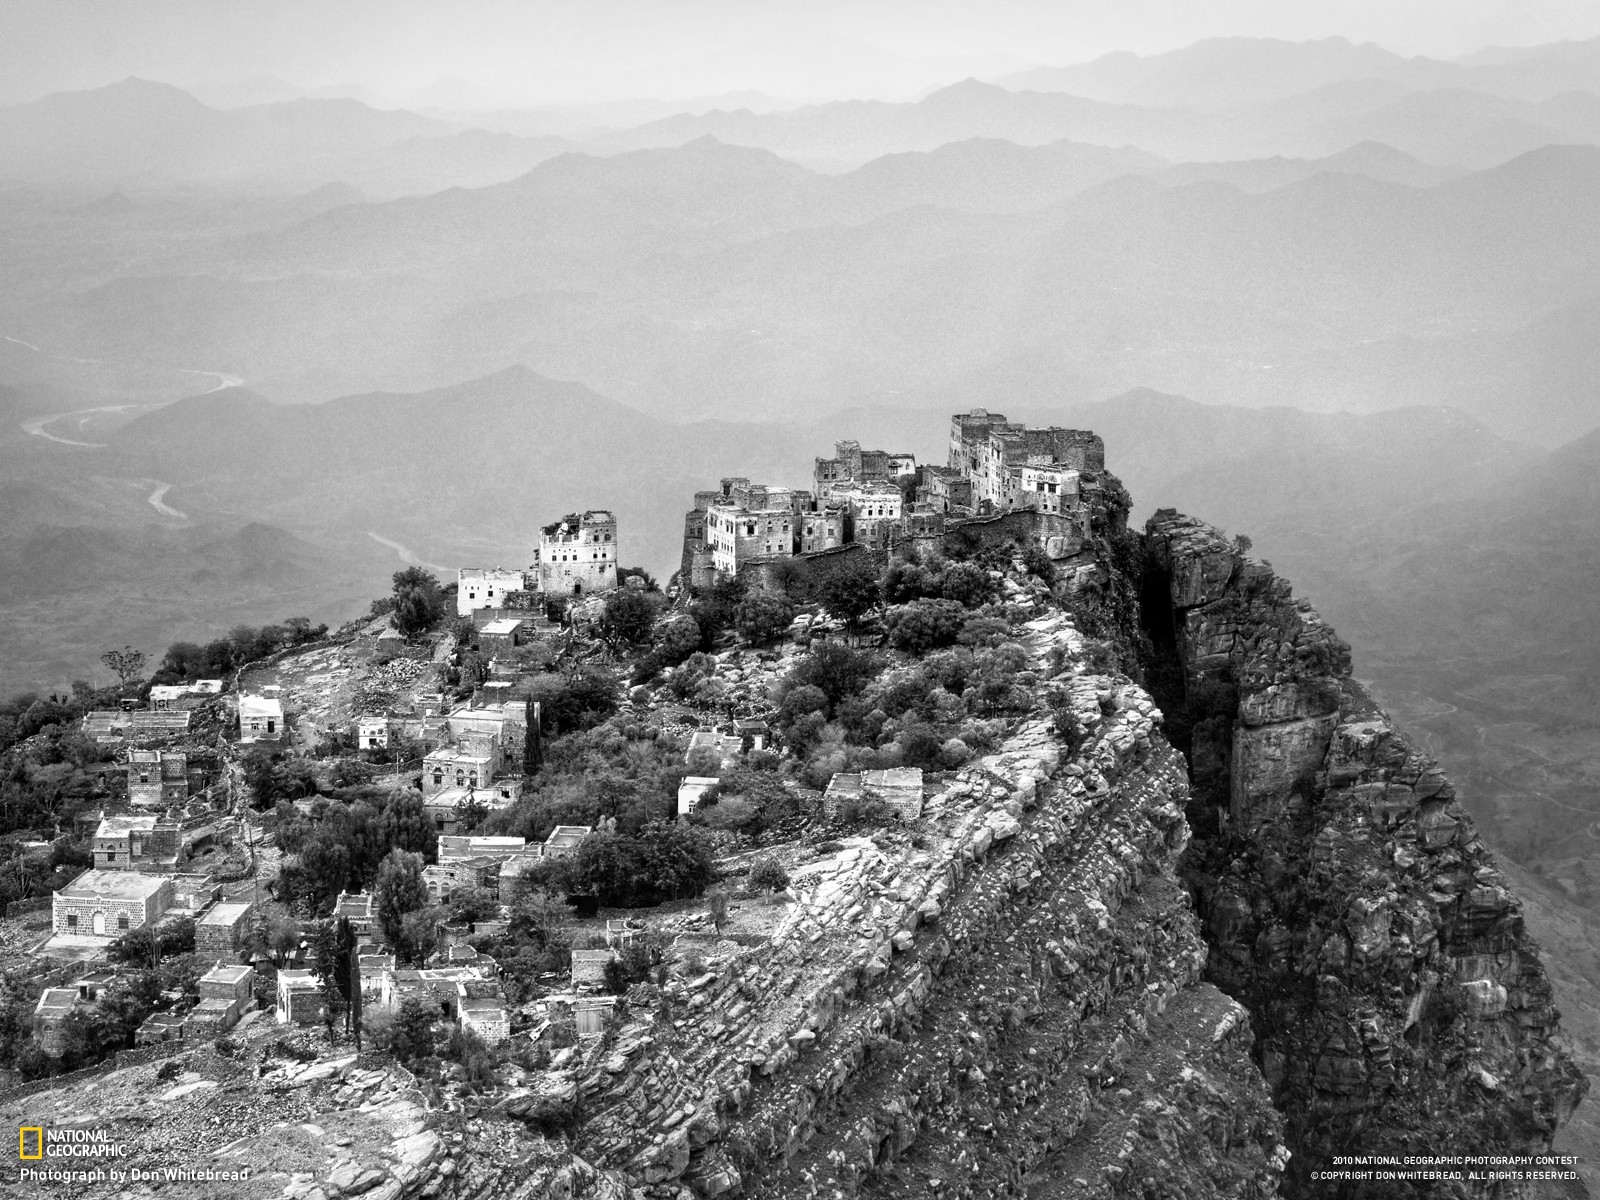 General 1600x1200 landscape monochrome Yemen National Geographic 2010 (Year)